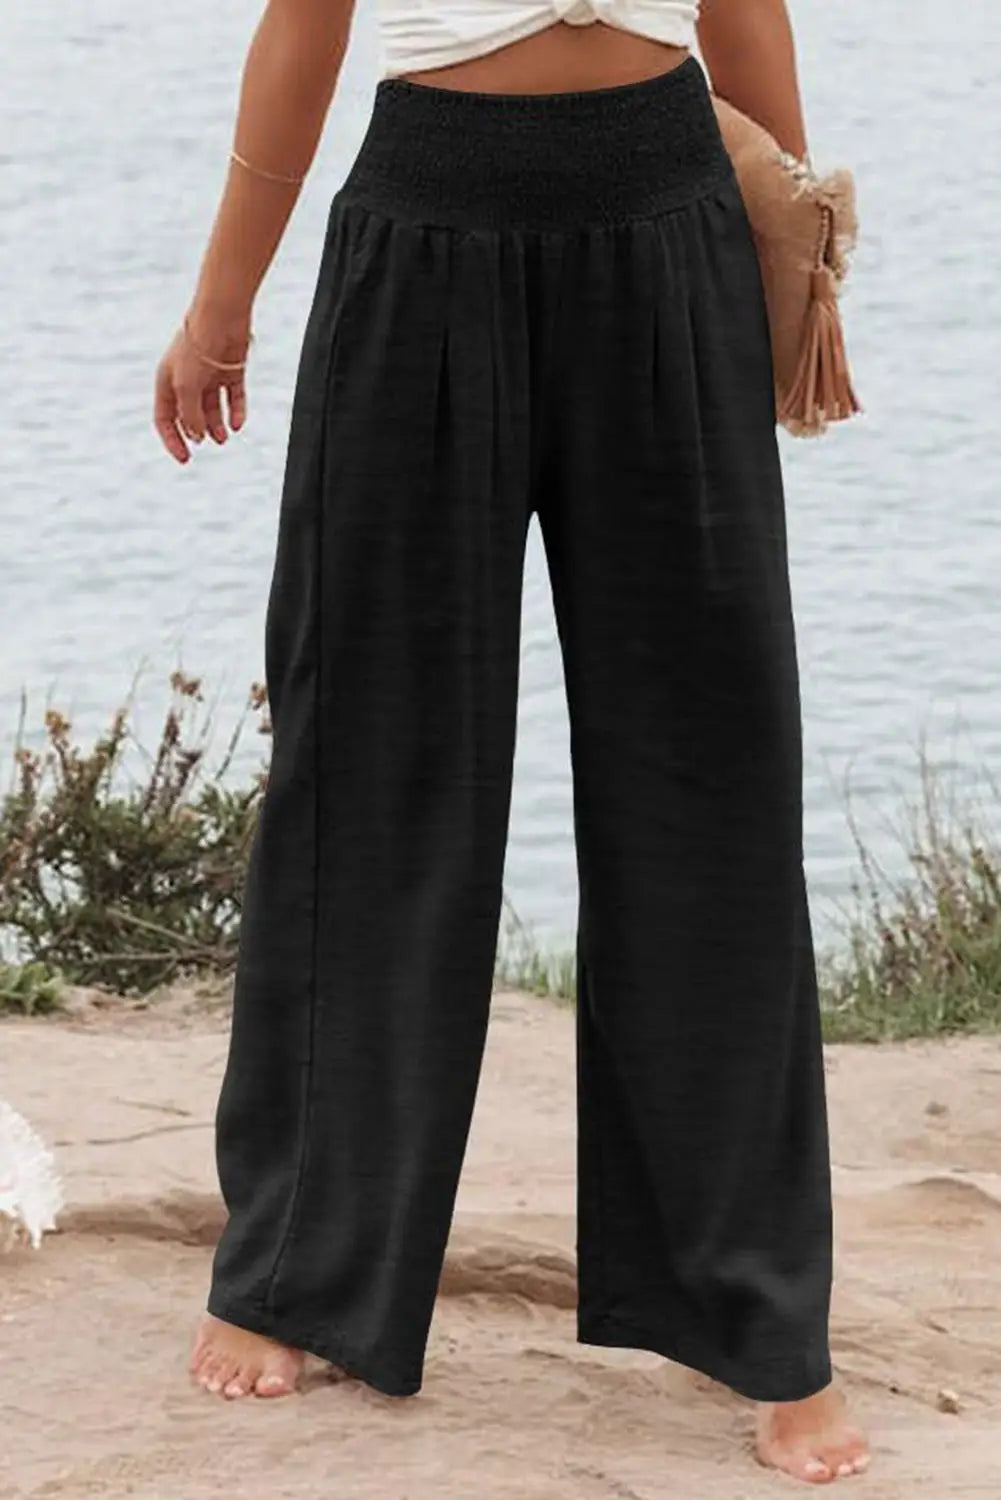 Black shirred high waist plus size wide leg pants - 1x / 100% polyester